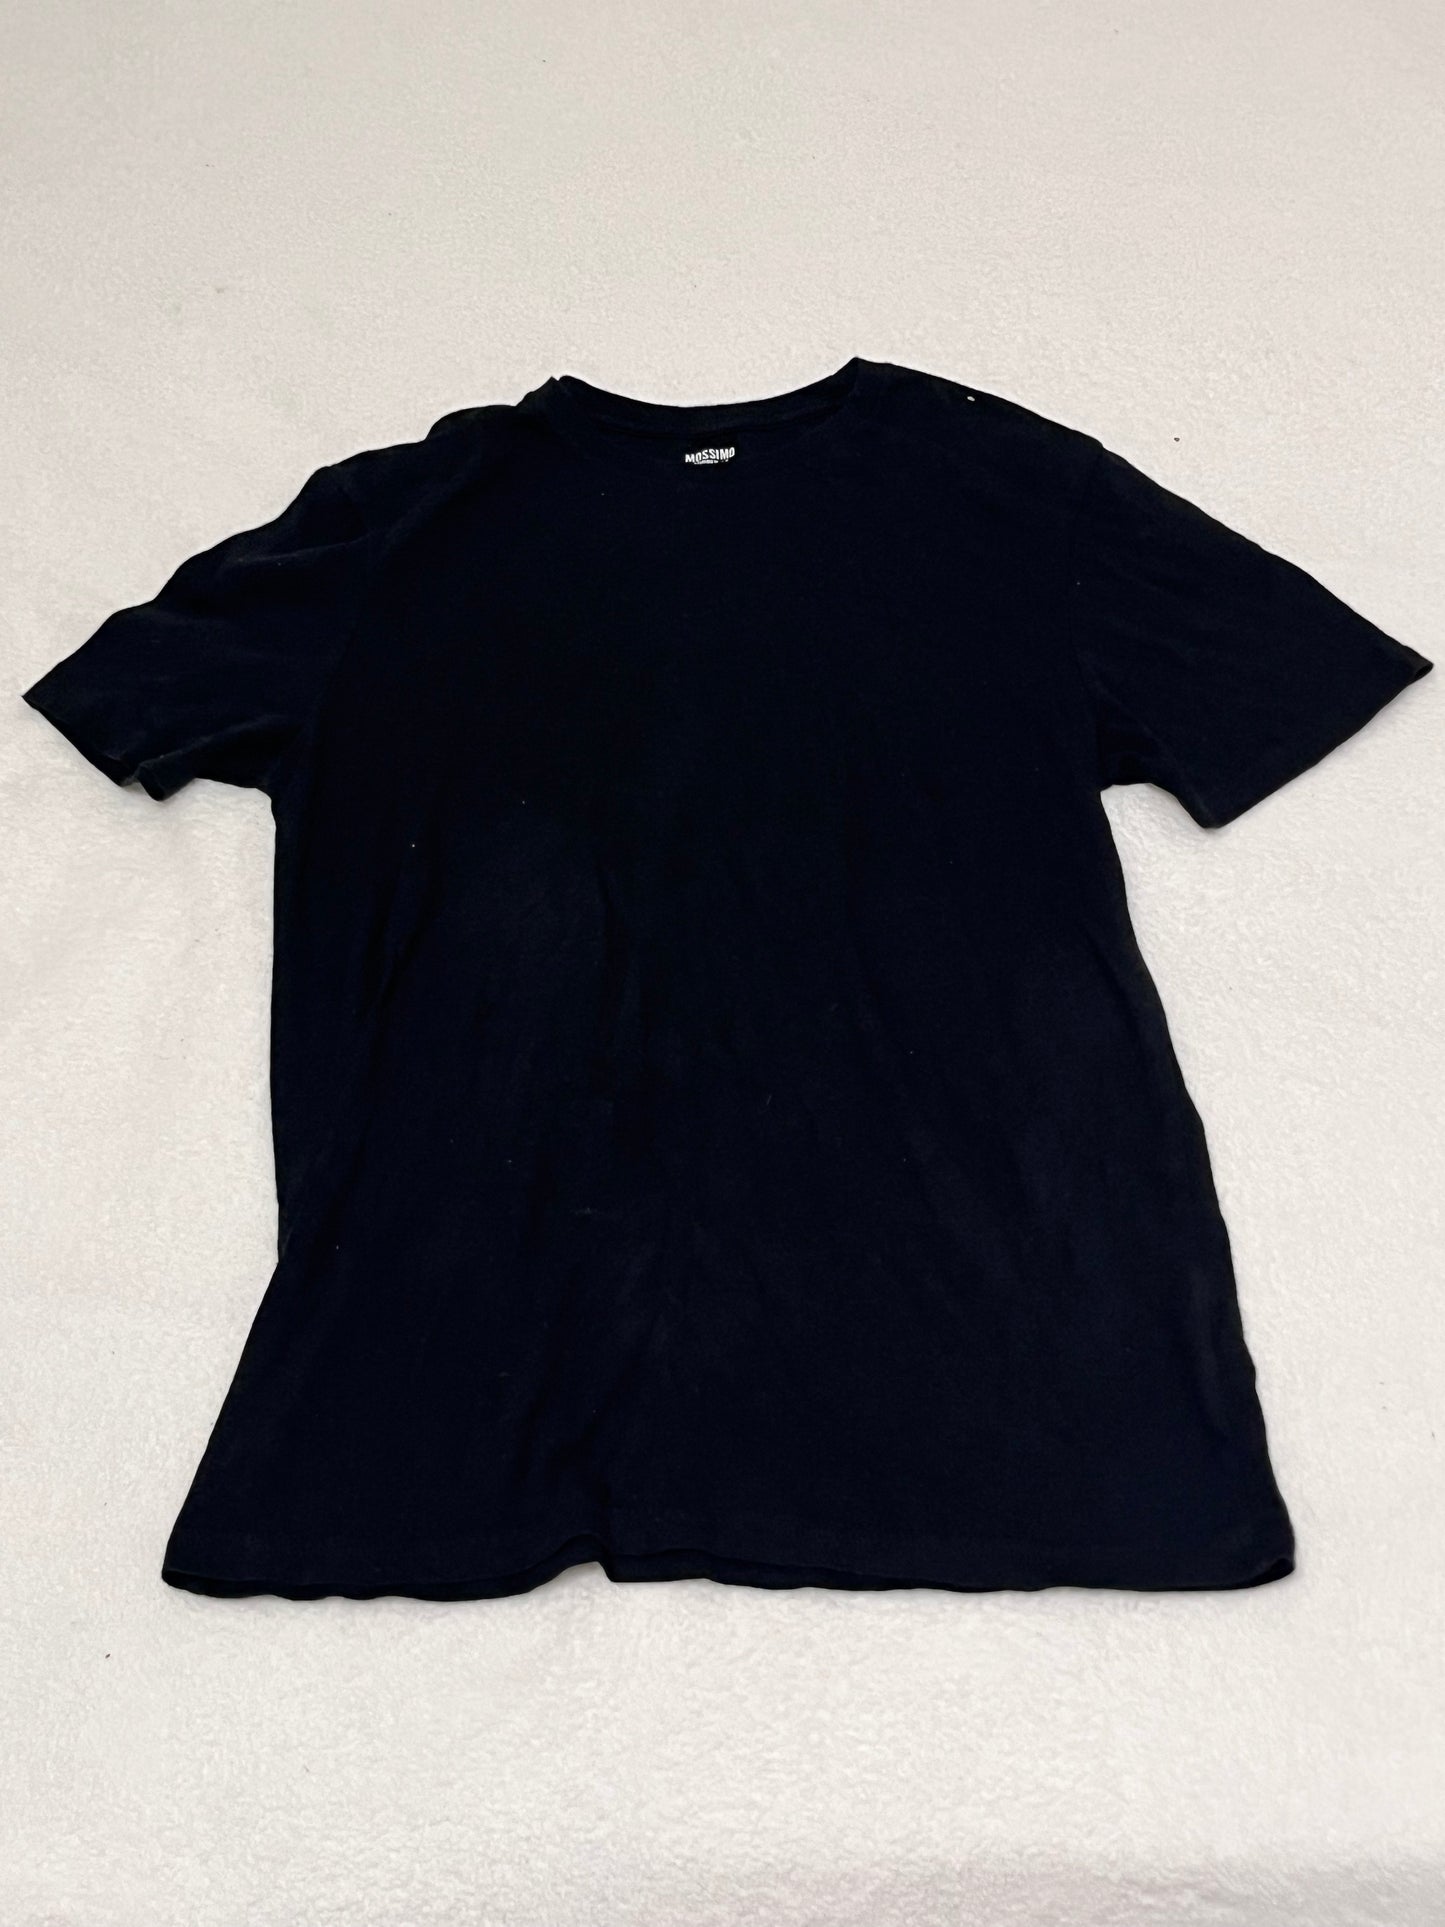 WRATH OF MAN: Bullet’s Black Cotton T-Shirt